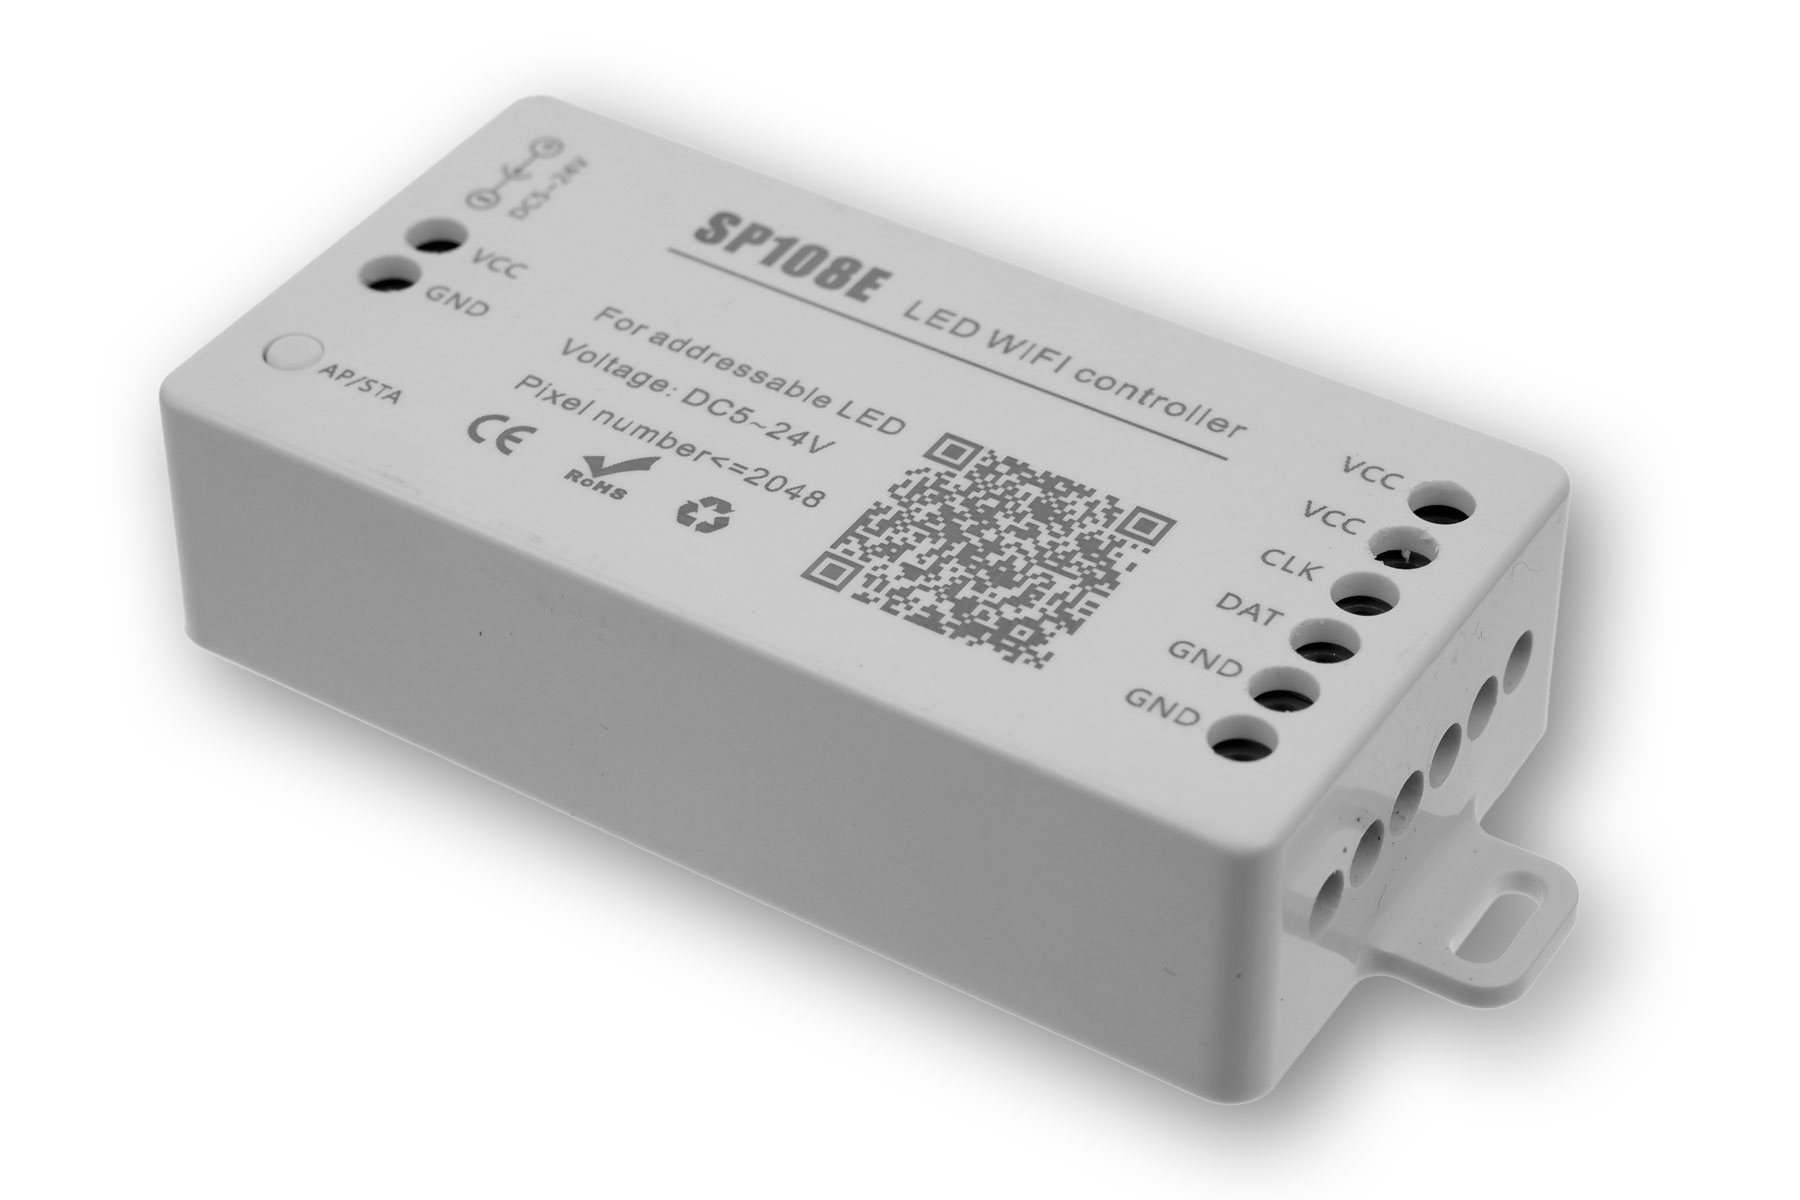 SP108E Standalone LED-Pixel-Controller mit App-Steuerung